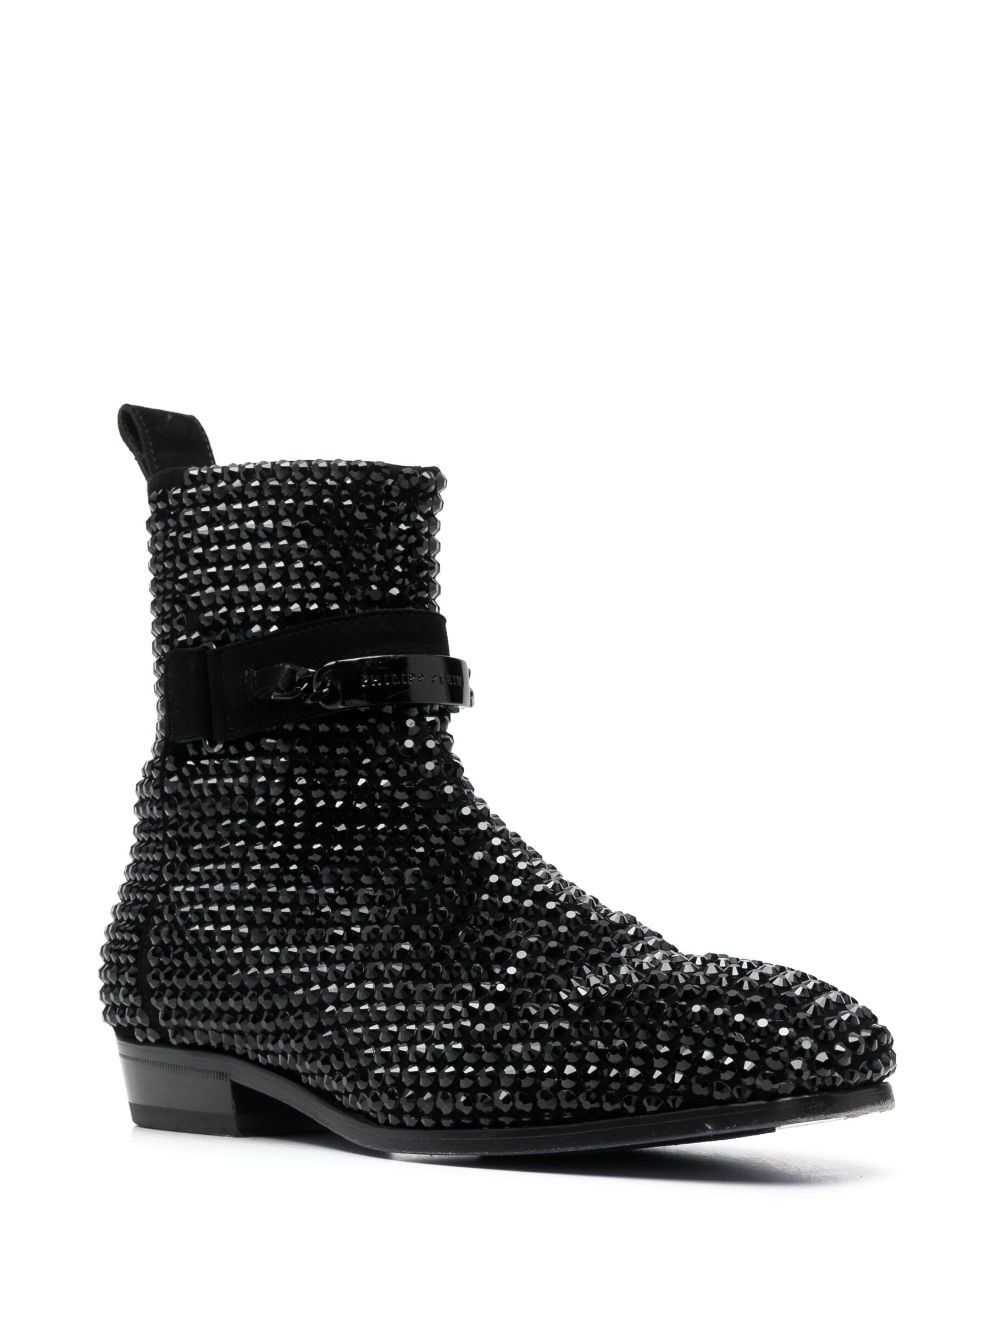 Philipp Plein crystal-embellished Suede Boots - Farfetch